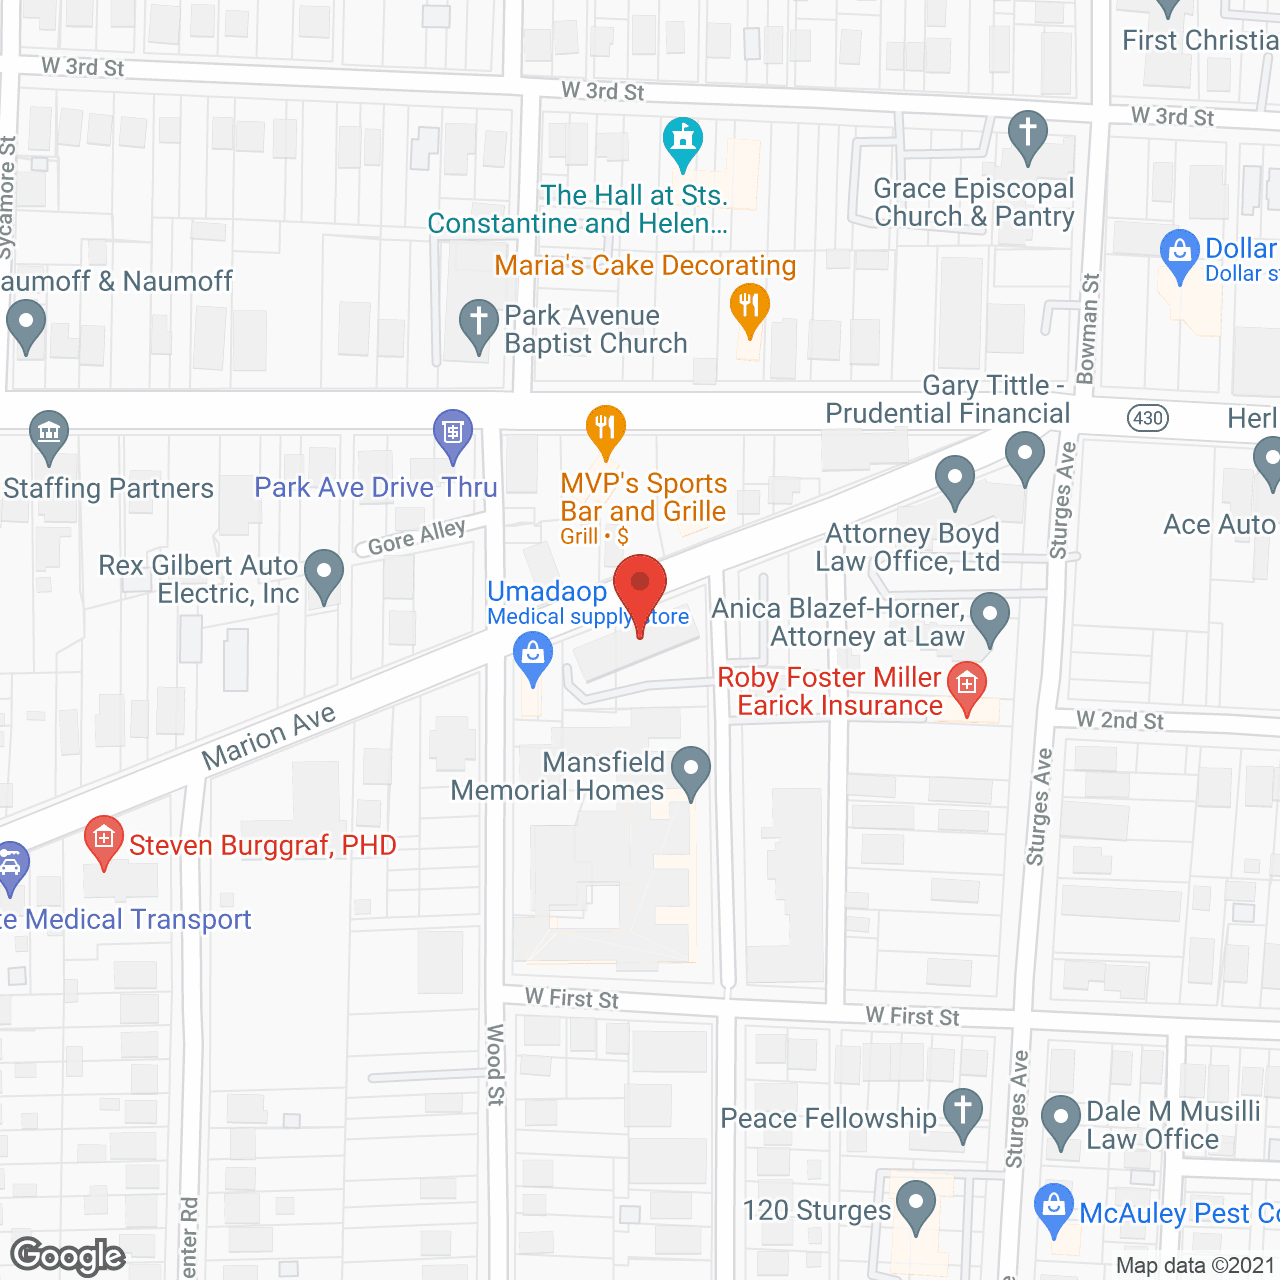 Mansfield Memorial Homes in google map